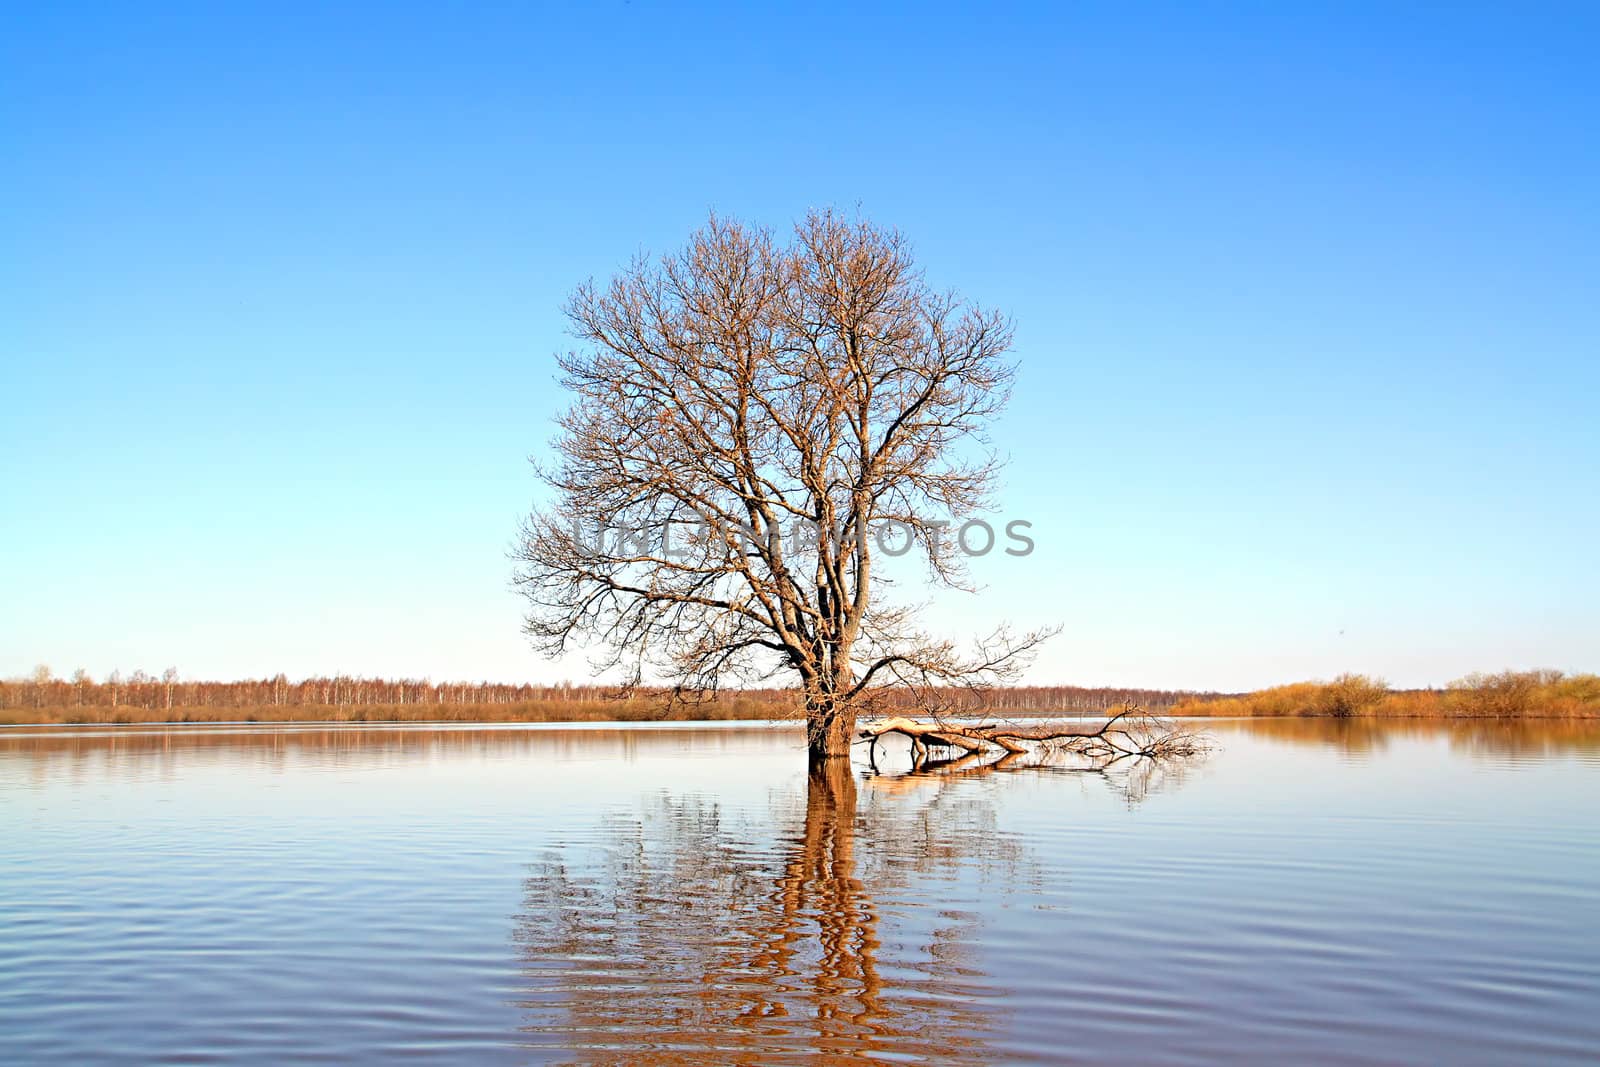 tree in water by basel101658